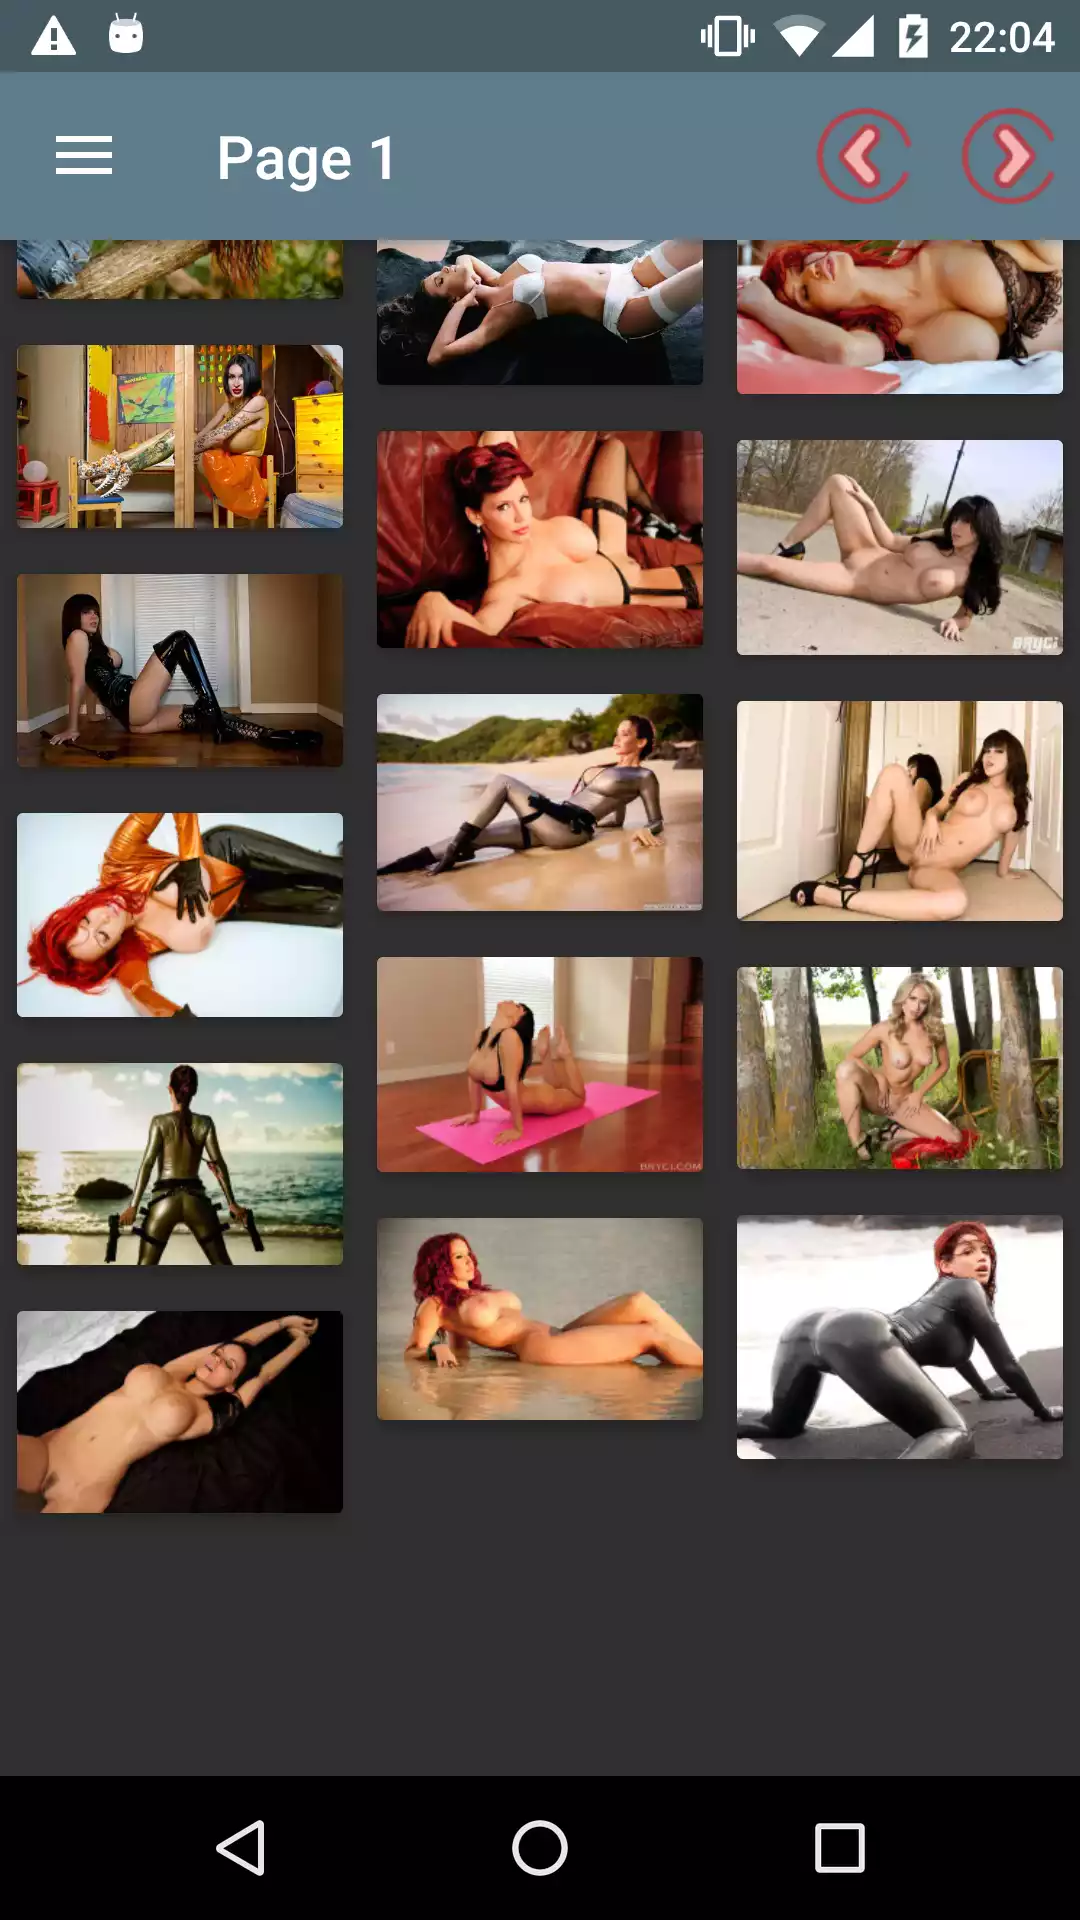 Hot Canadian Walls pics,pictures,top,manga,image,hot,gallery,app,best,apps,game,hentai,pron,photos,hantai,puzzles,wallpapers,apk,eroticwallpapers,adult,mod,henati,panties,sexy,porn